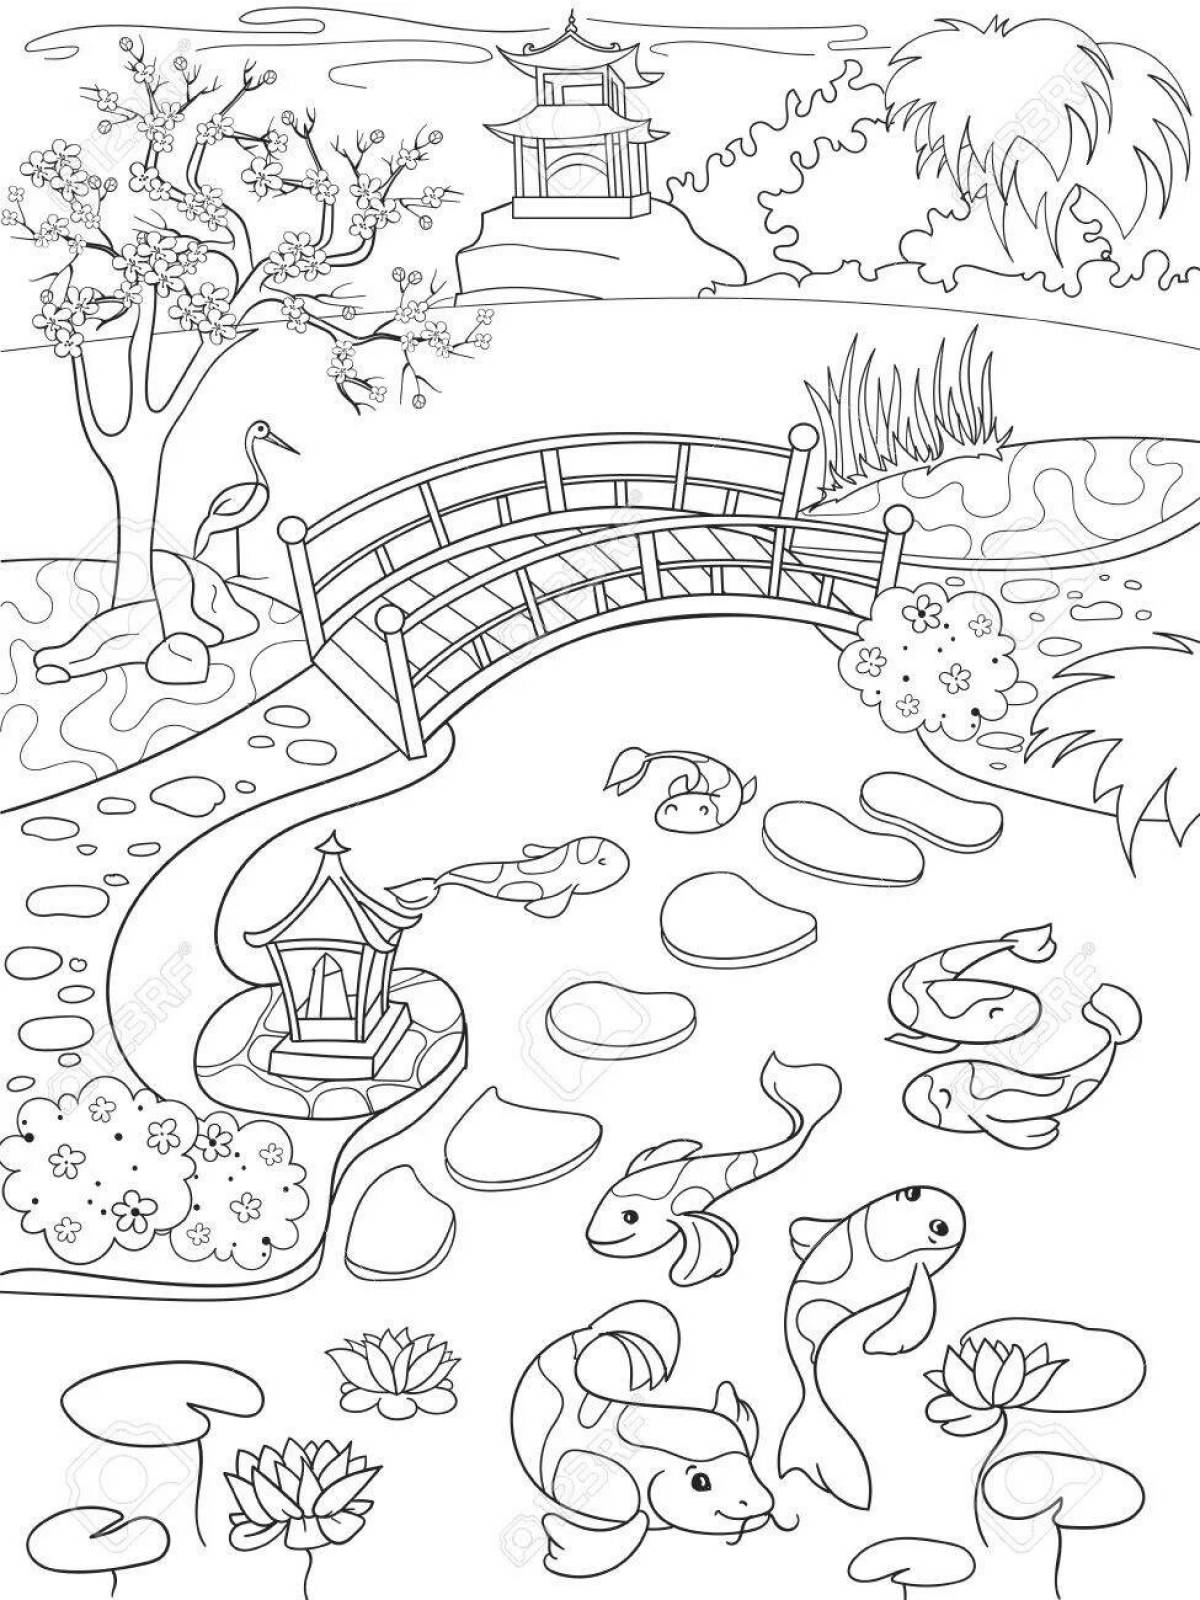 Calm Japanese landscape coloring page